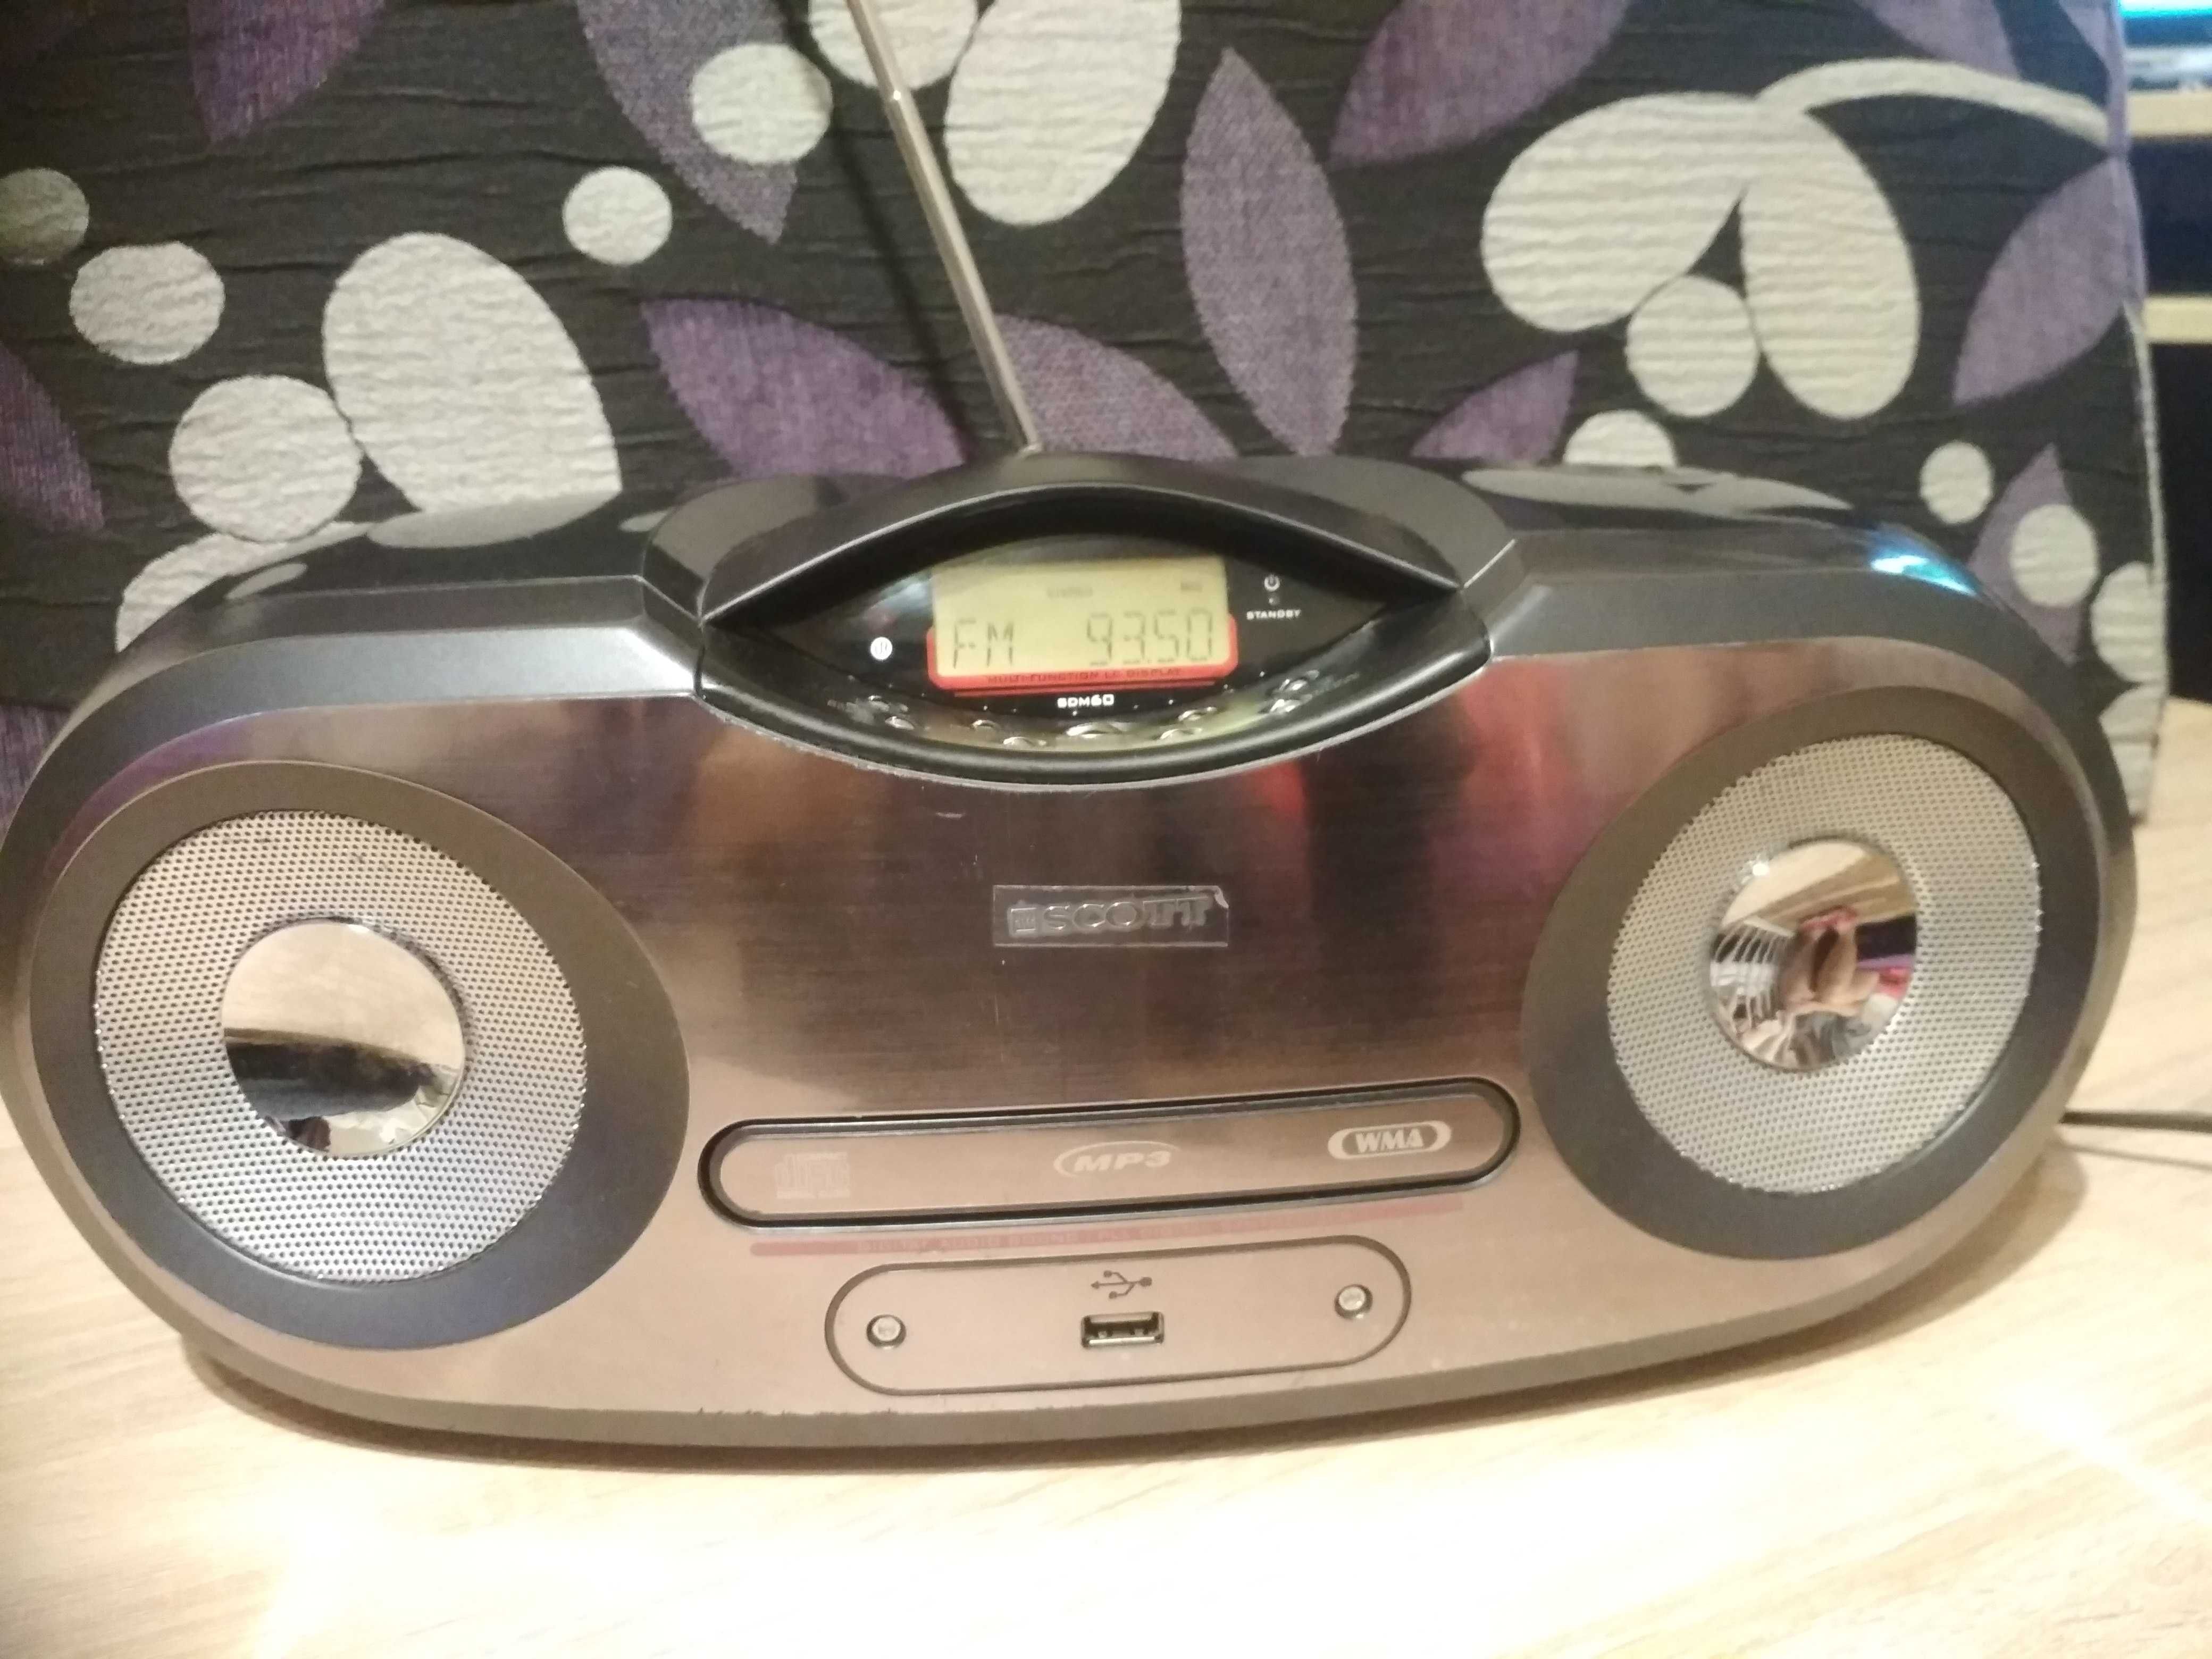 Radioodtwarzacz Scott SDM 60 CD USB MP3 RADIO